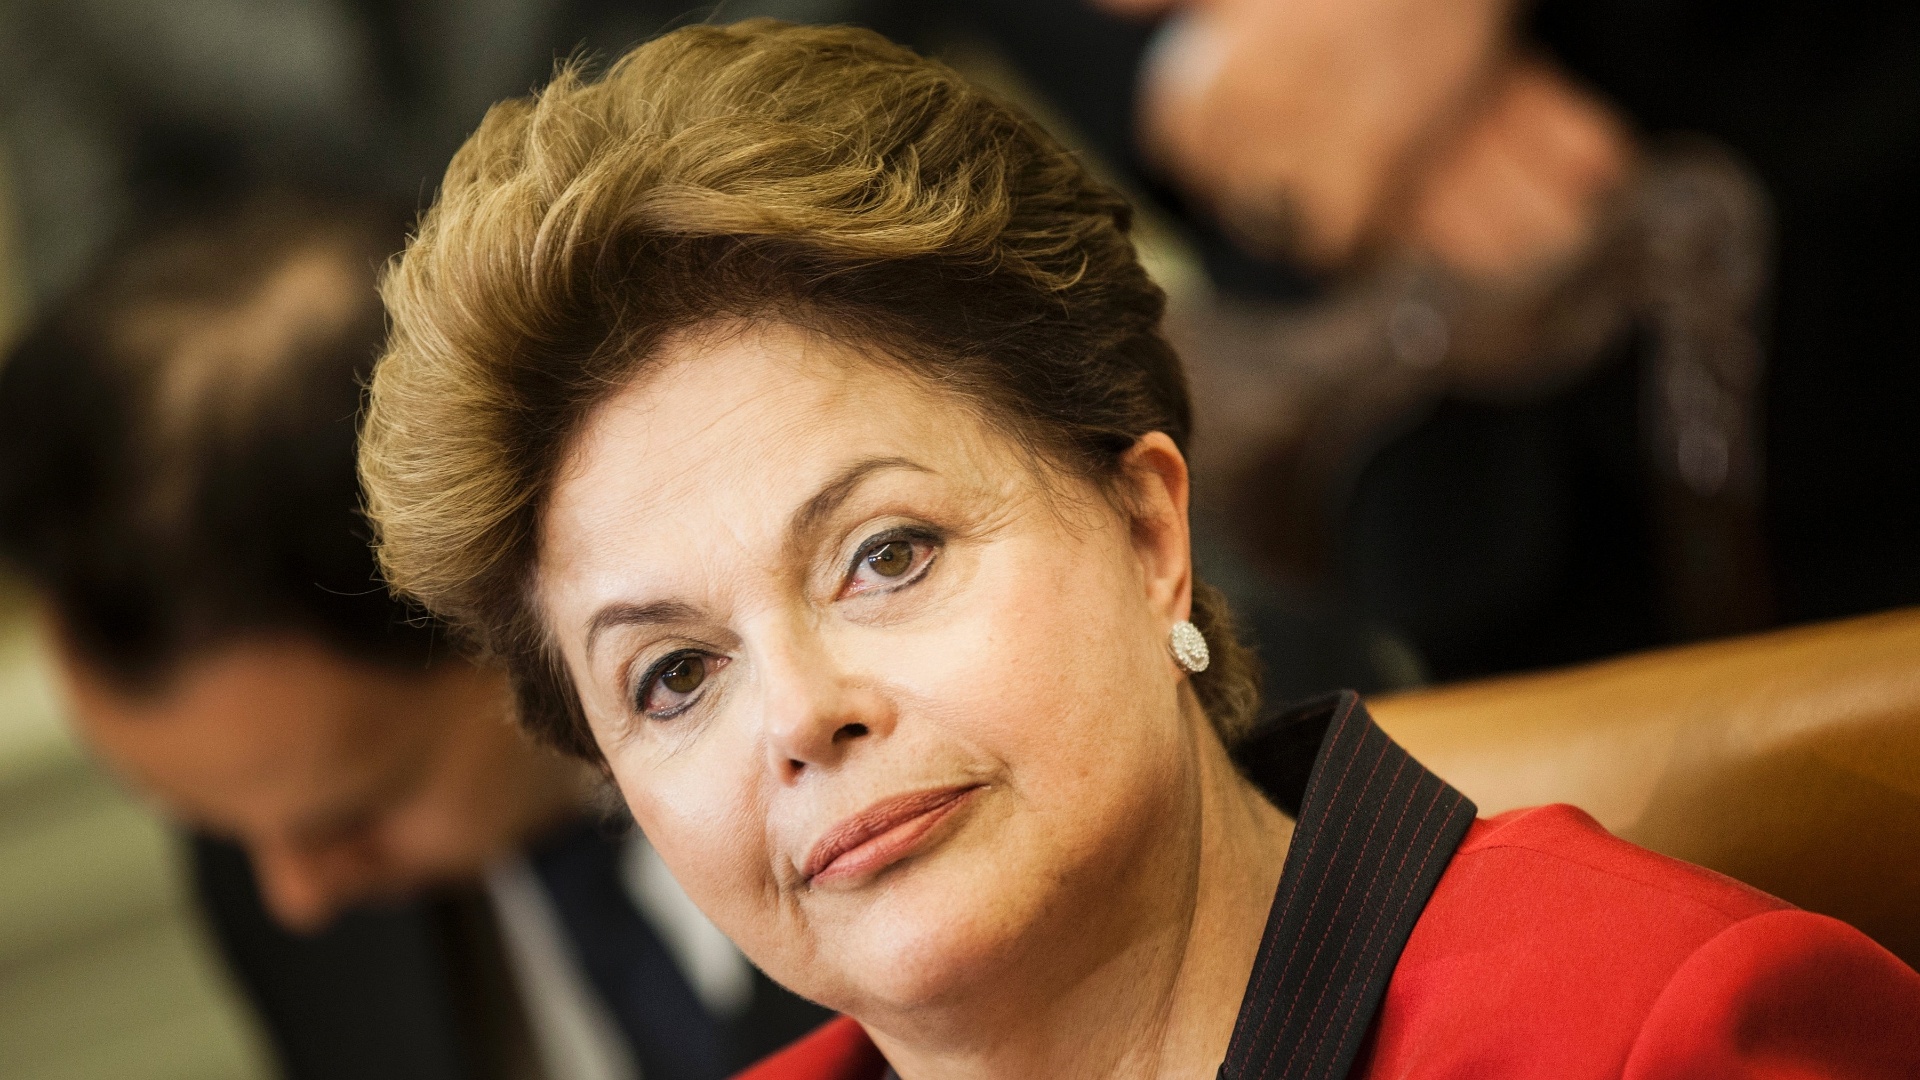 Brazilian president, Dilma Rousseff